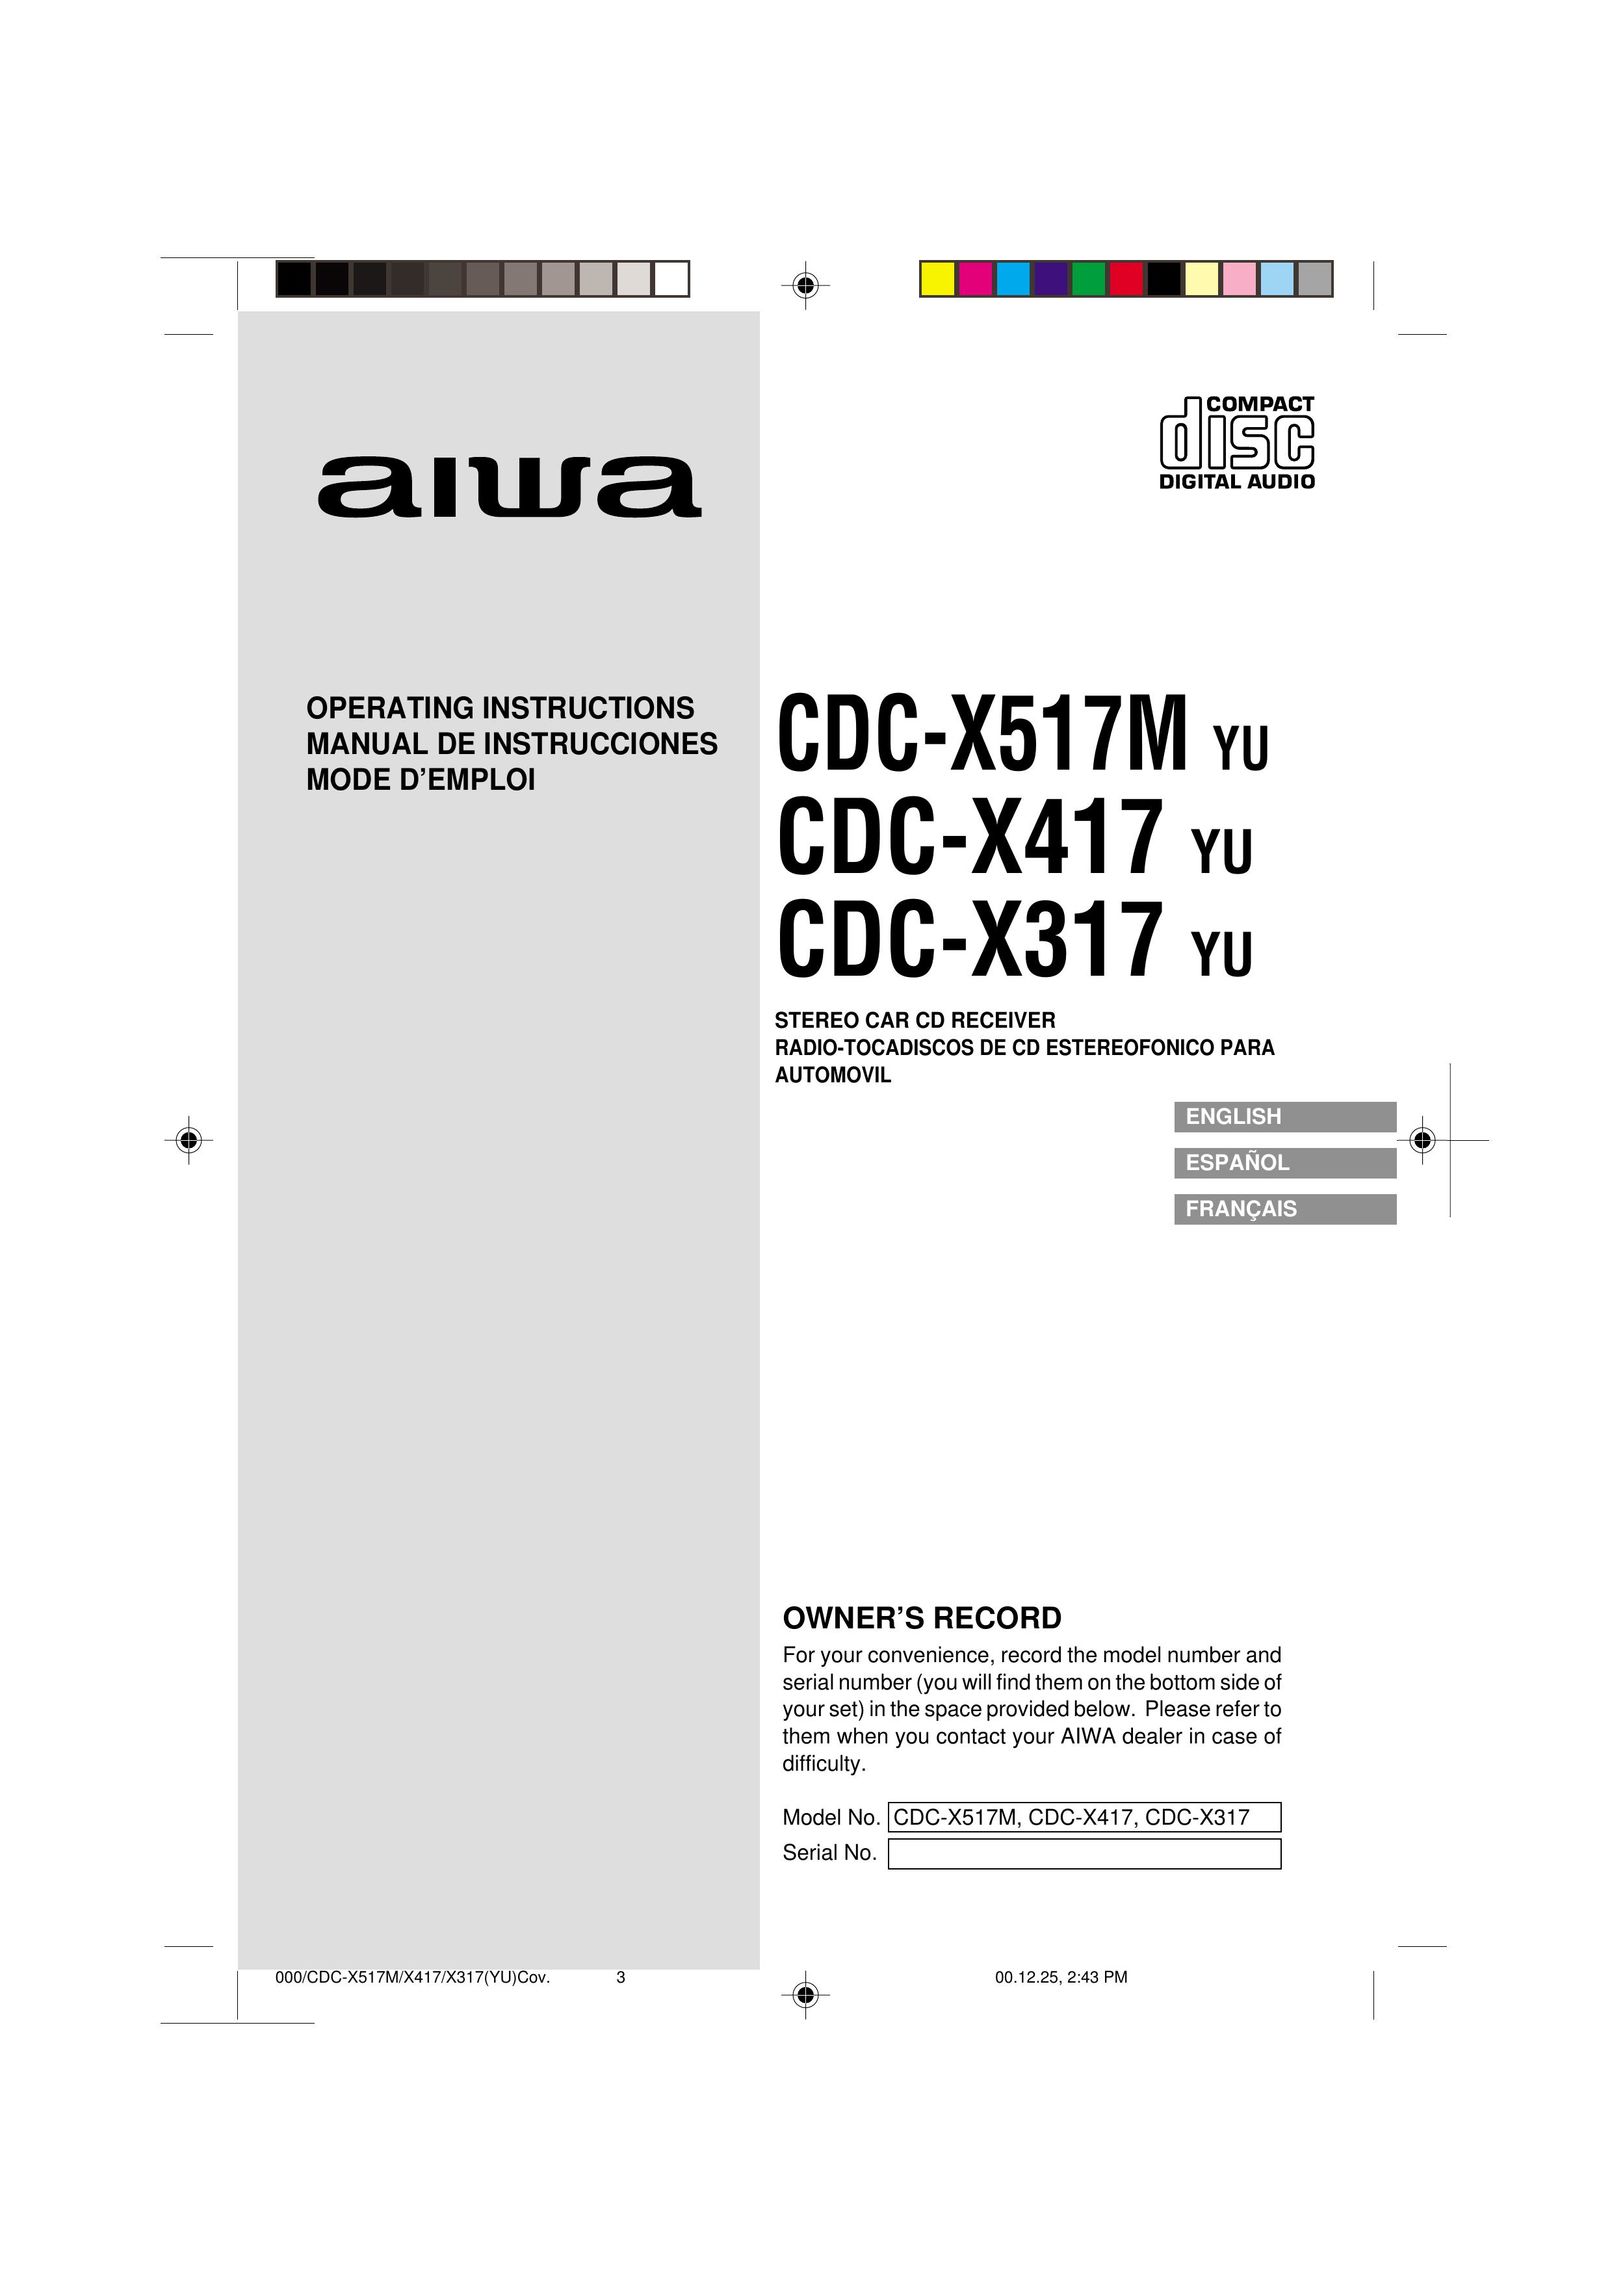 Aiwa CDC-X417 Car Stereo System User Manual